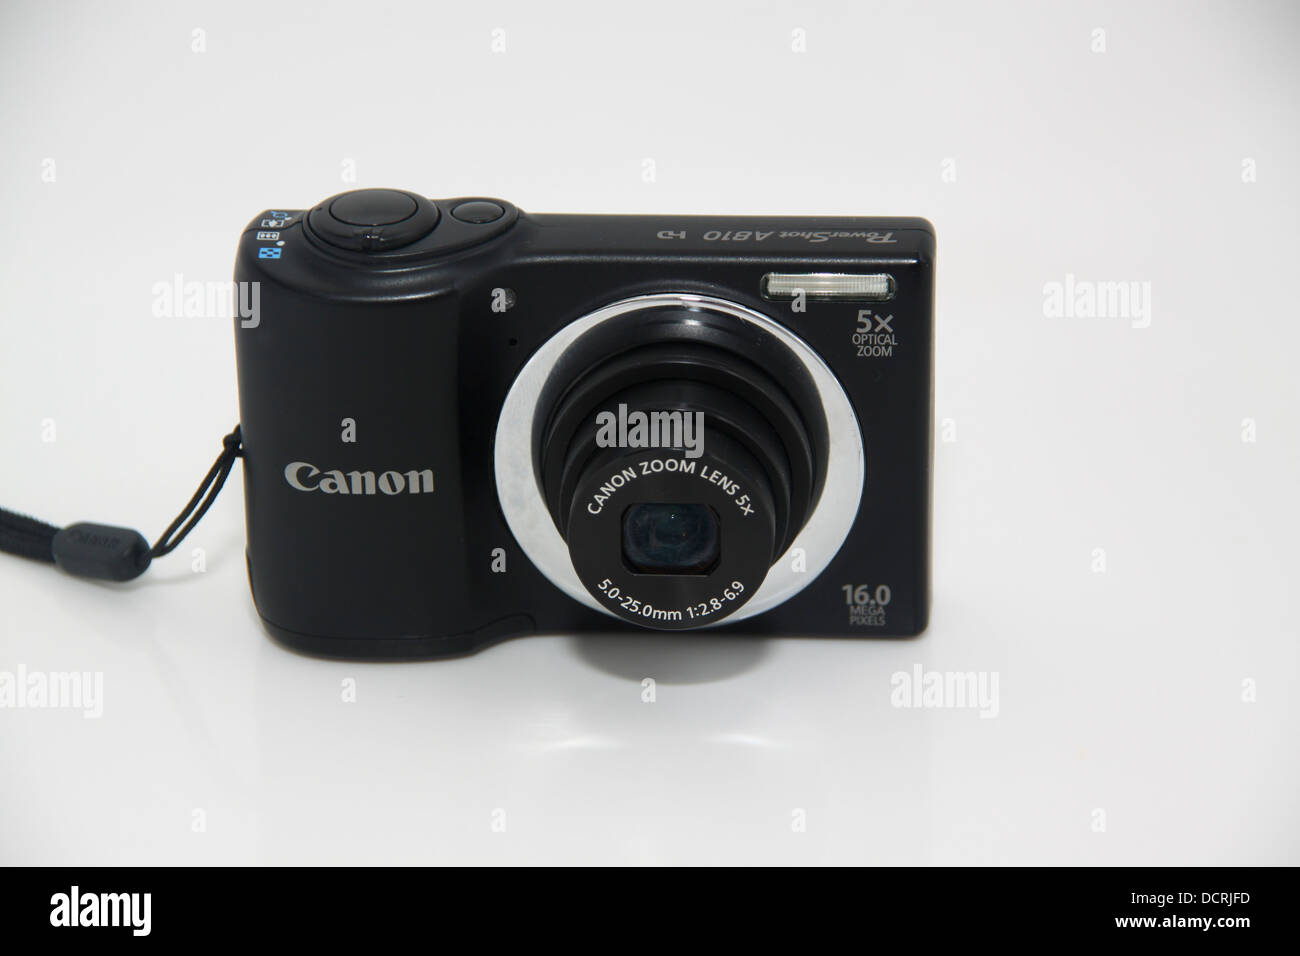 Canon Powershot A810 compact camera Stock Photo